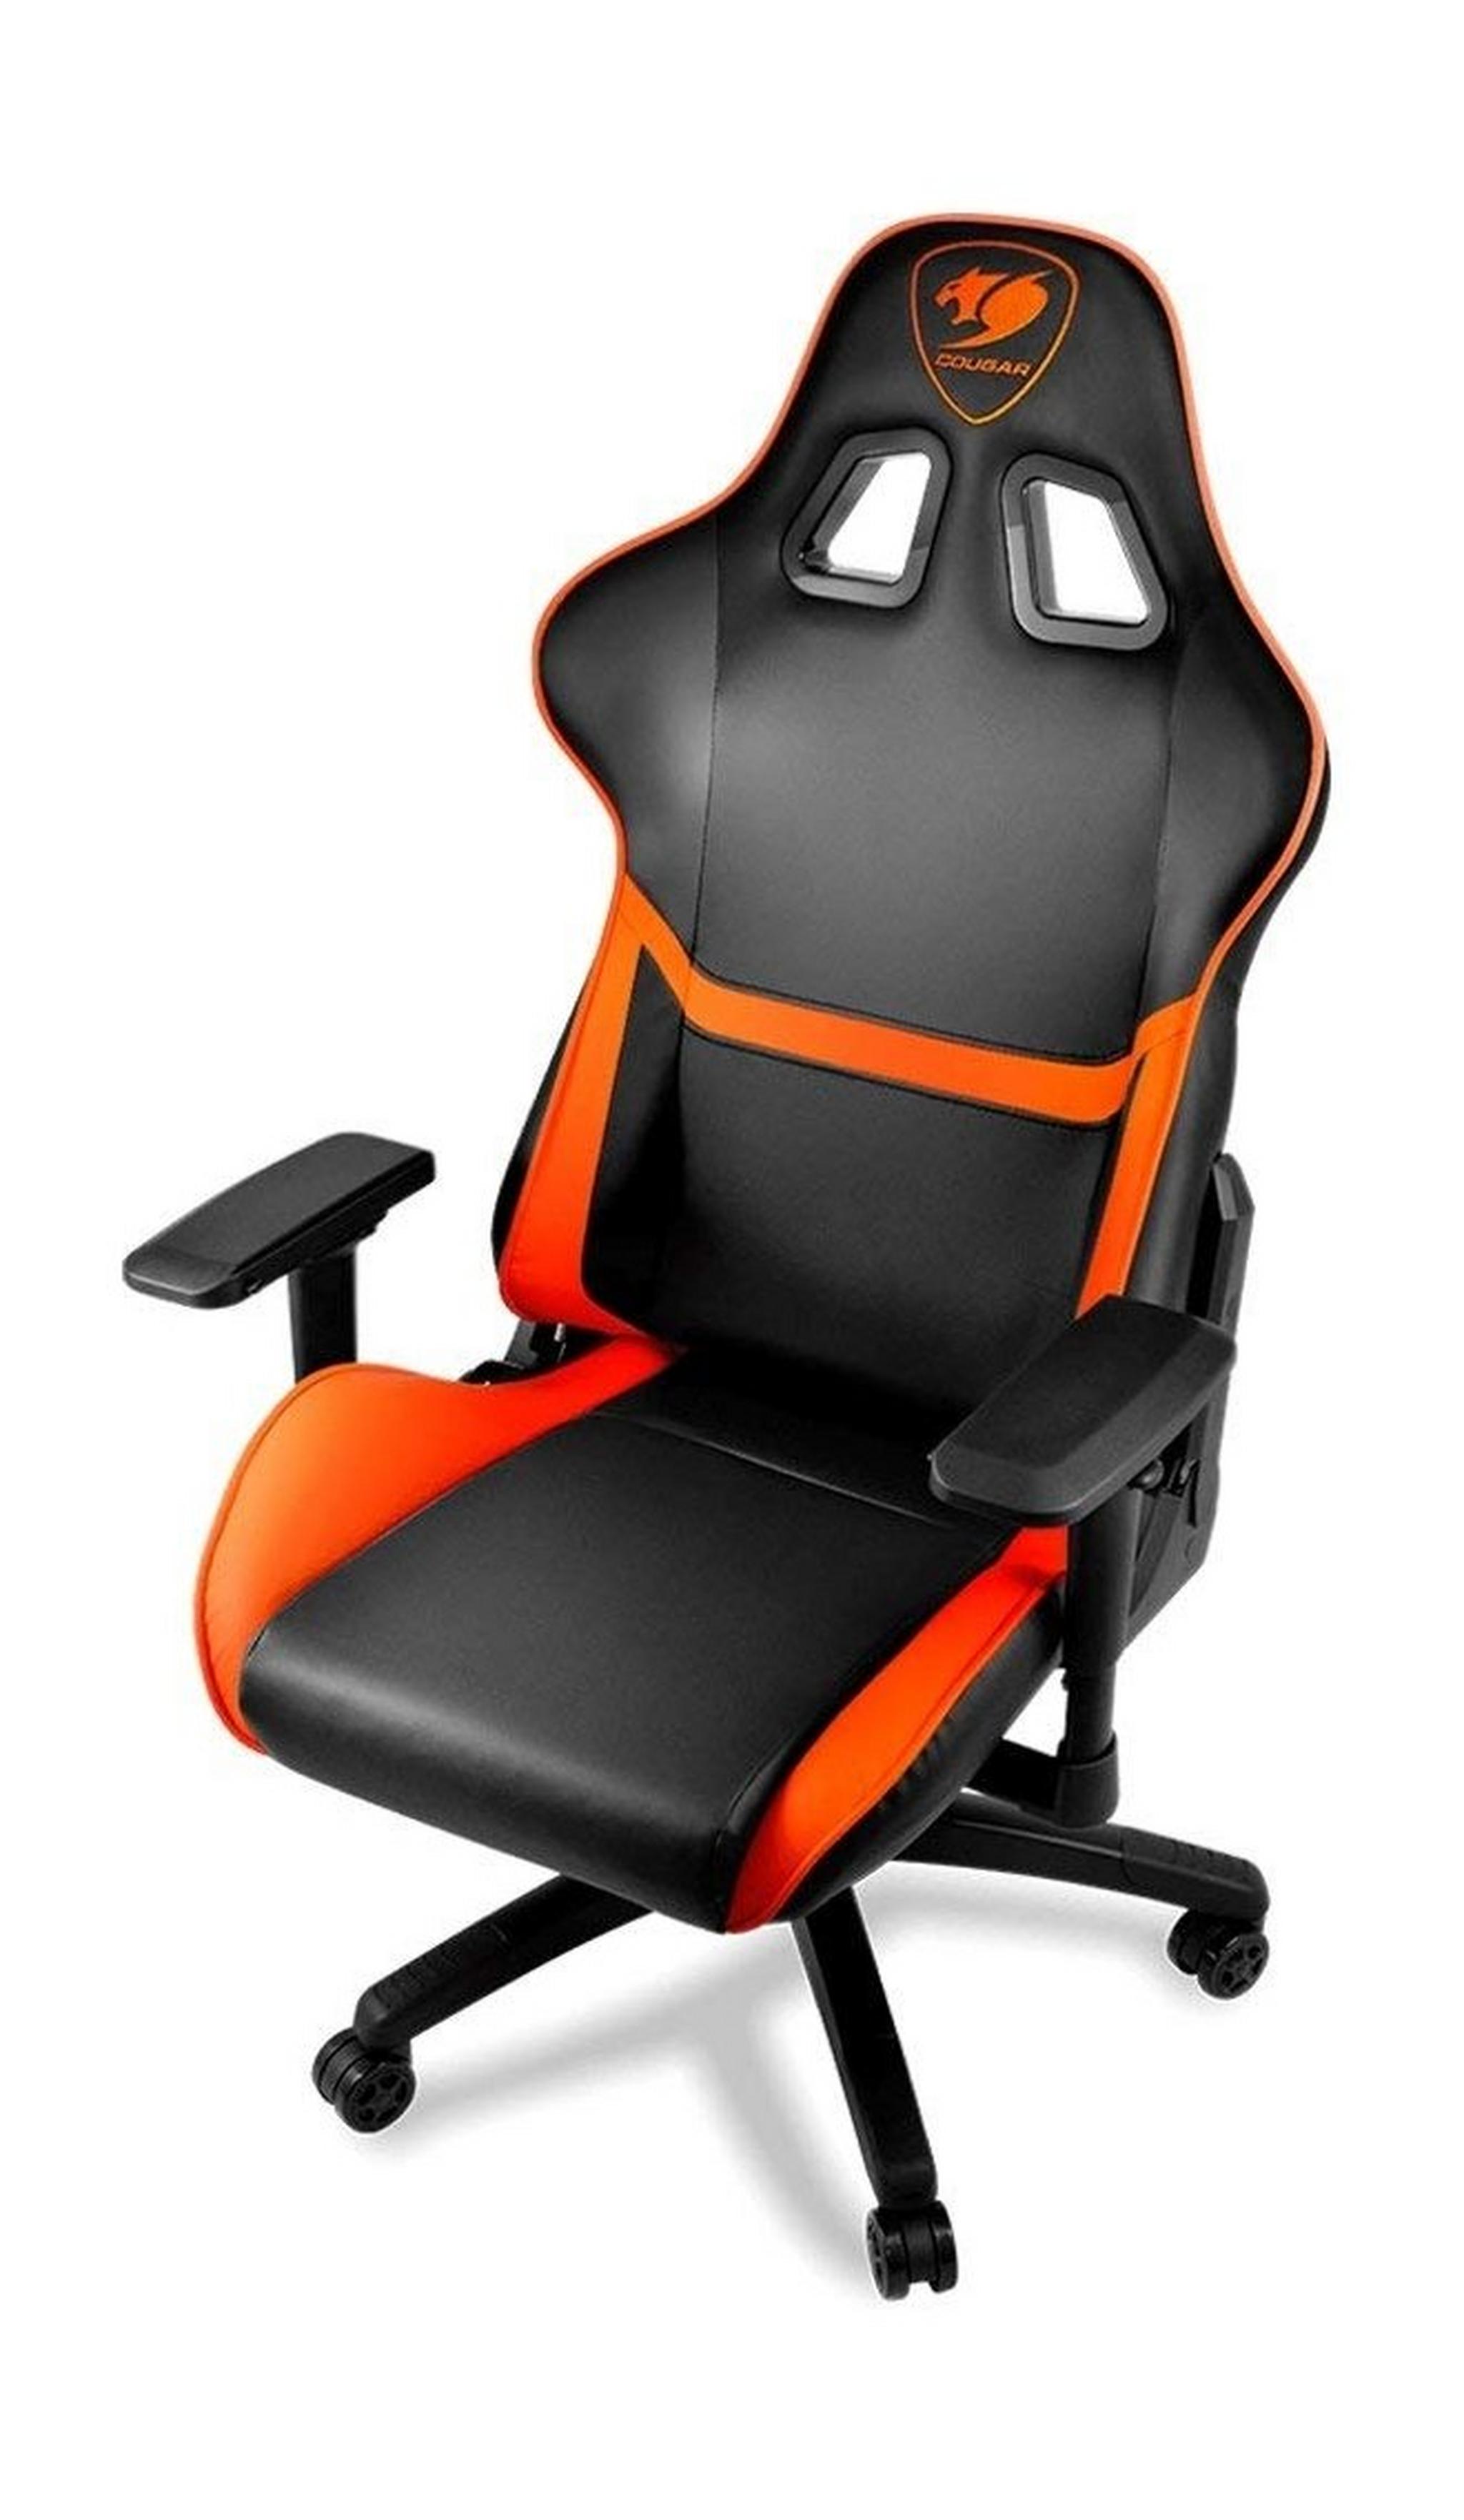 Cougar Adjustable Gaming Chair - Armor Orange